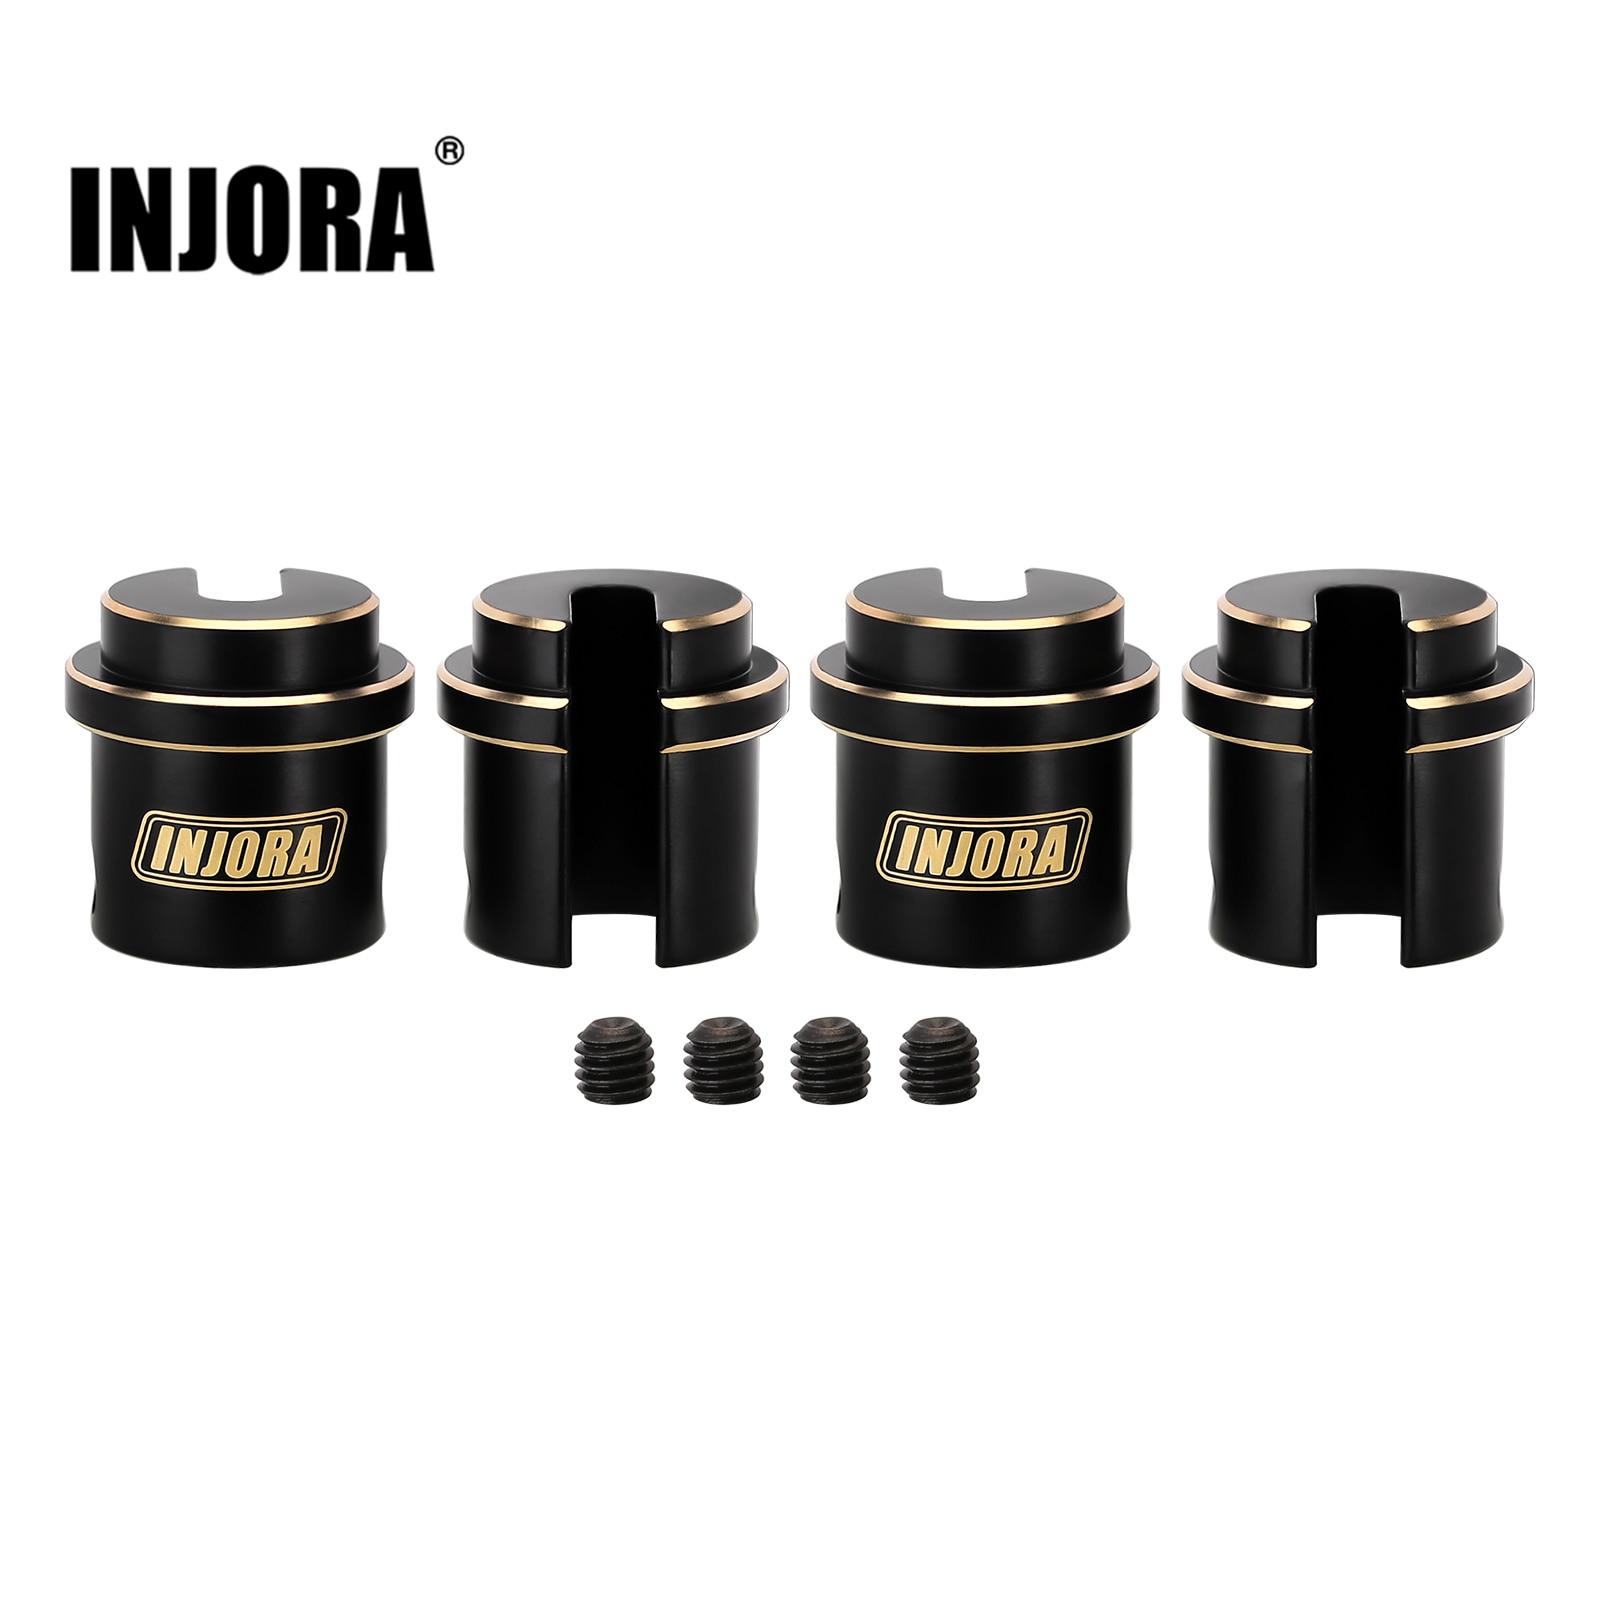 INJORA-Black-Coating-Brass-Shock-Lower-Spring-Retainer-for-1-10-RC-Crawler-Axial-SCX10-PRO.jpg